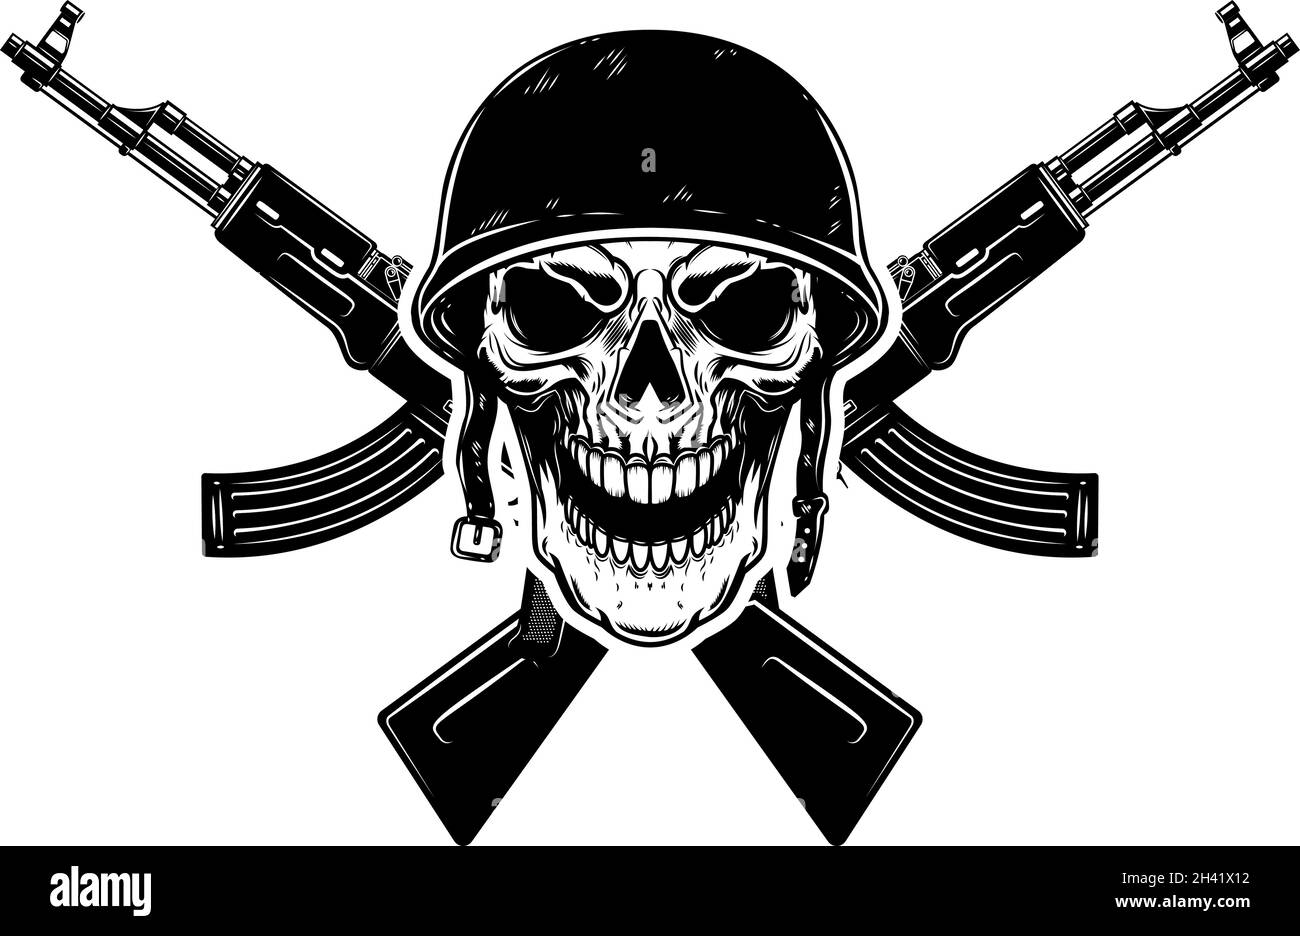 Illustration of soldier skull in military helmet and crossed russian assault rifles. Design element for logo, label, sign, emblem. Vector illustration Stock Vector